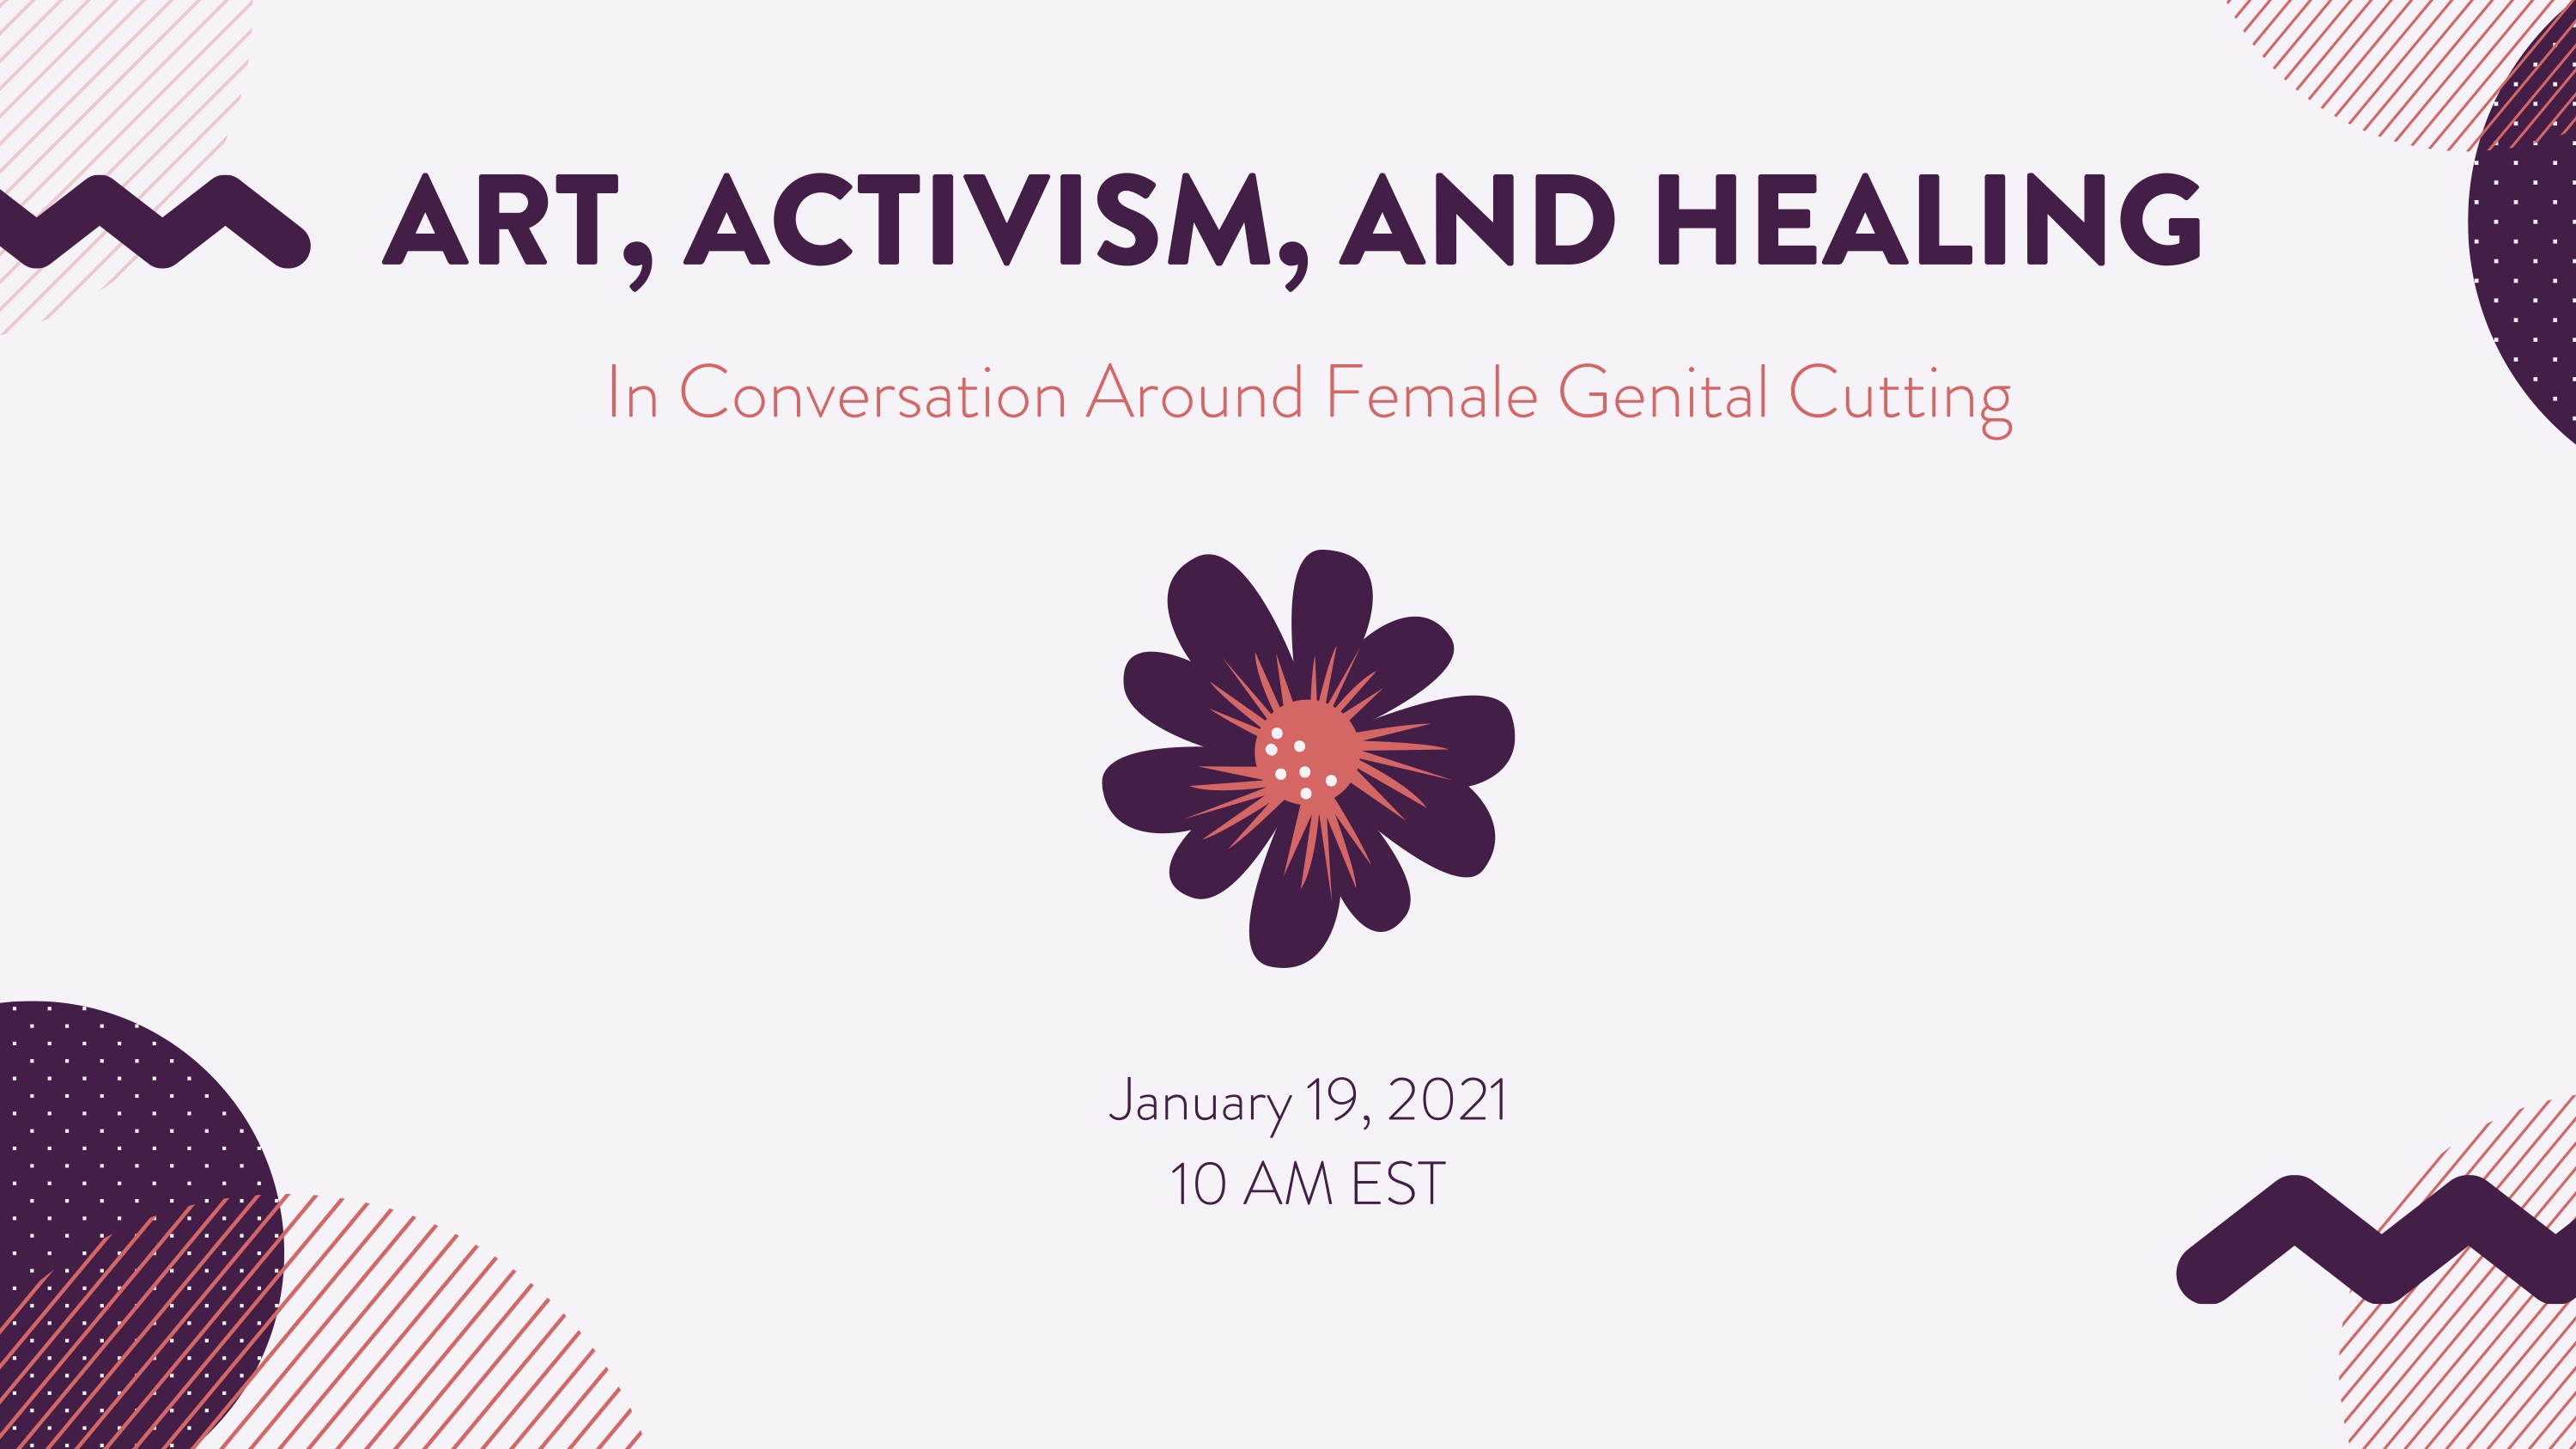 Art, Activism, and Healing webinar: In Conversation Around Female Genital Cutting